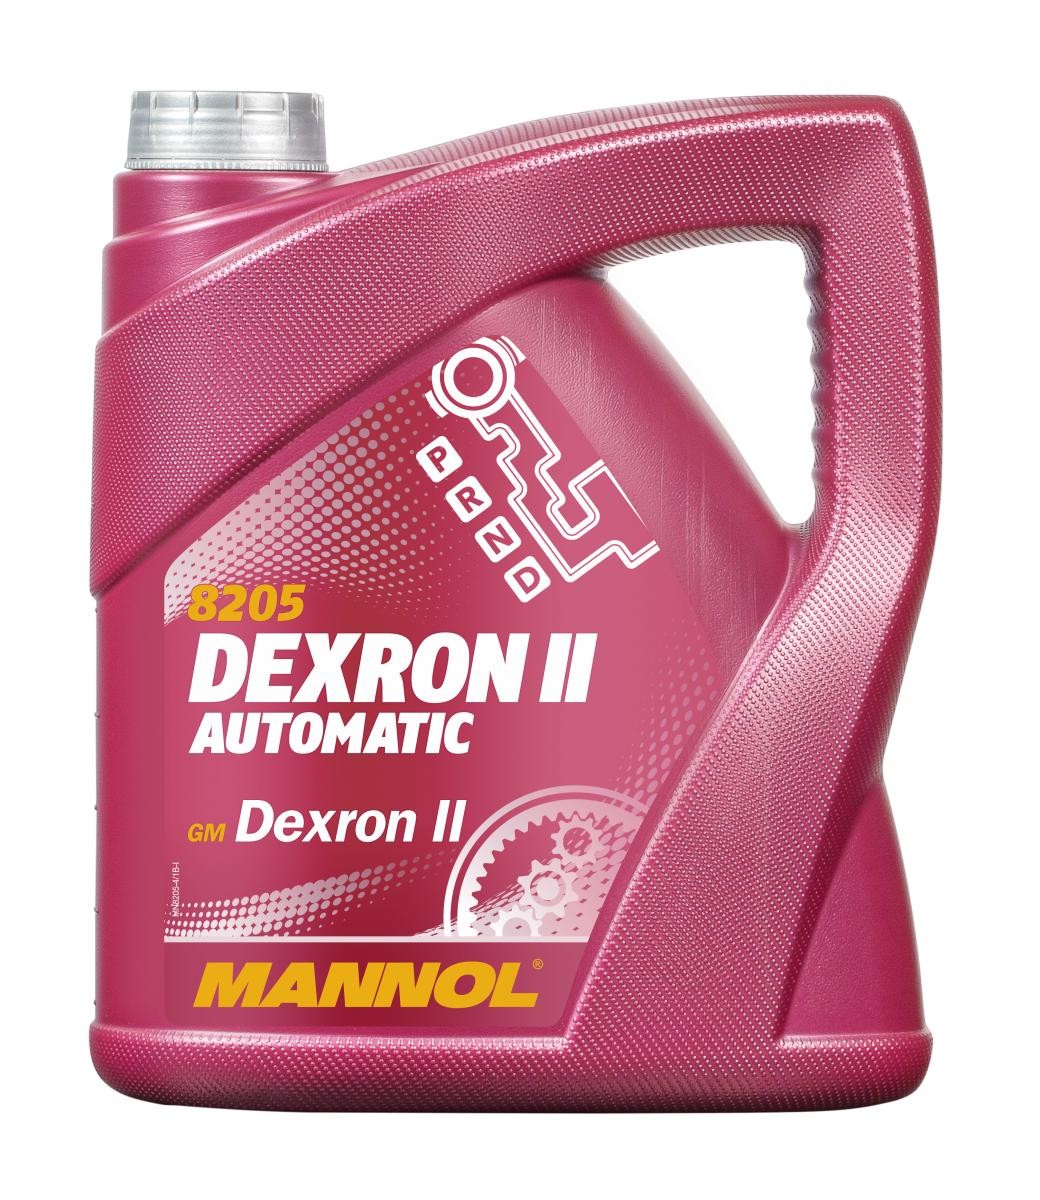 MANNOL DEXRON II Automatic MN8205-4 Automatic transmission fluid ATF II, 4l, red